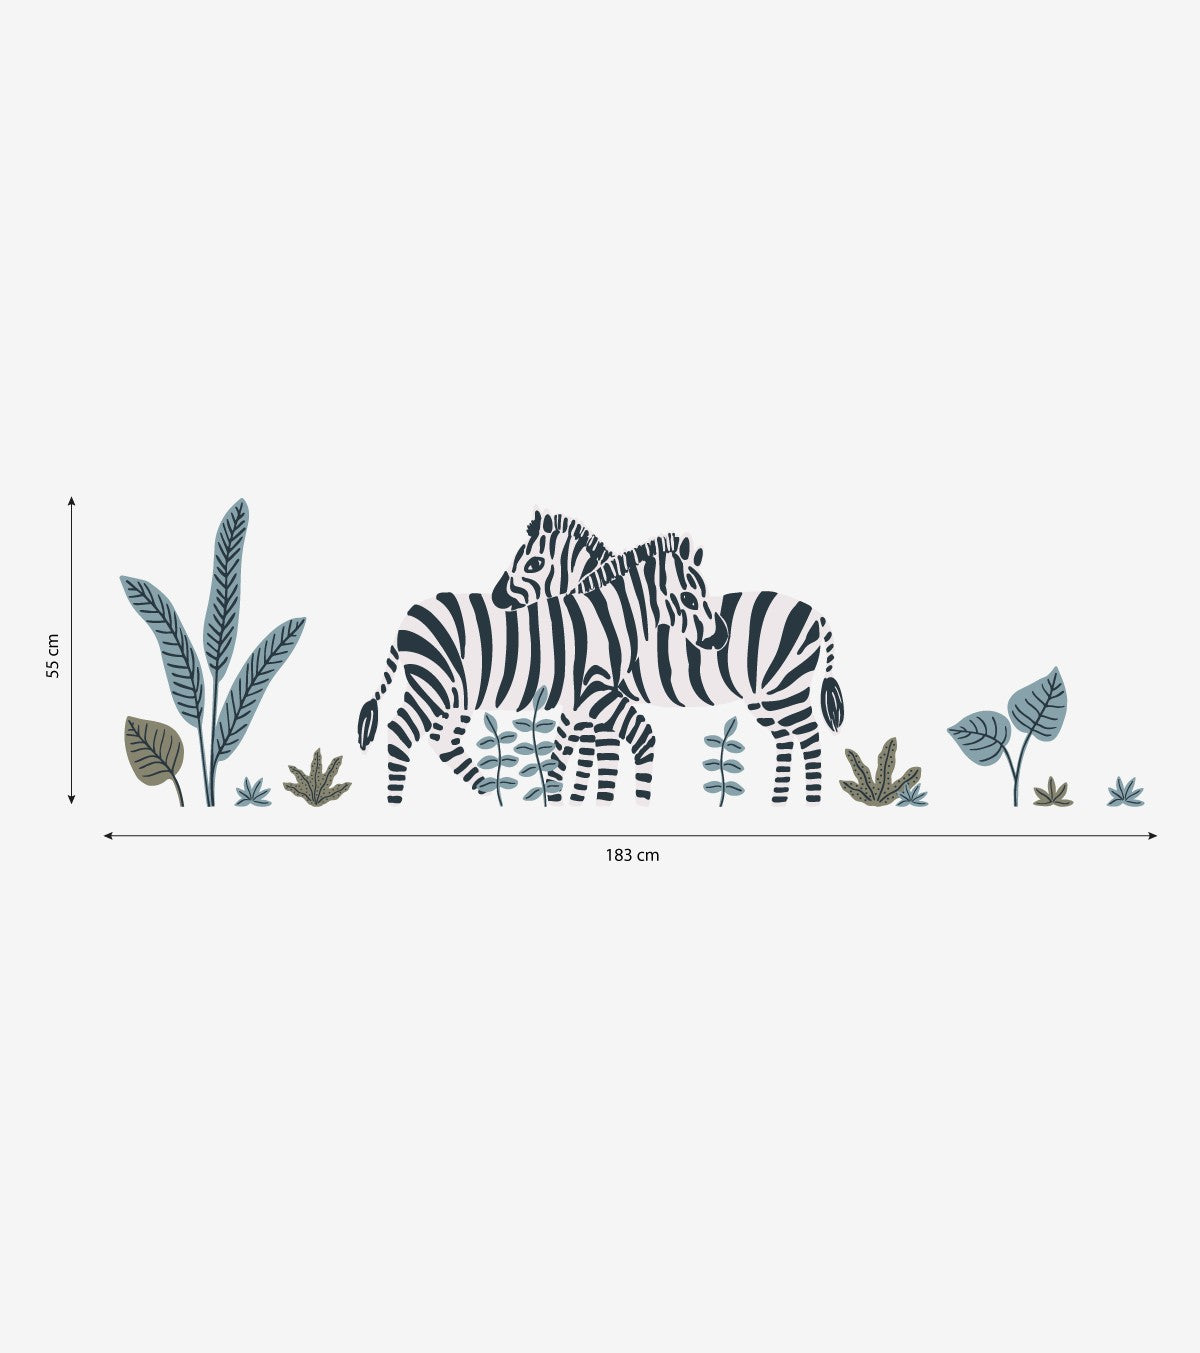 TANZANIA - Wandsticker Wandbilder - Zebras, Palmen und Blätter